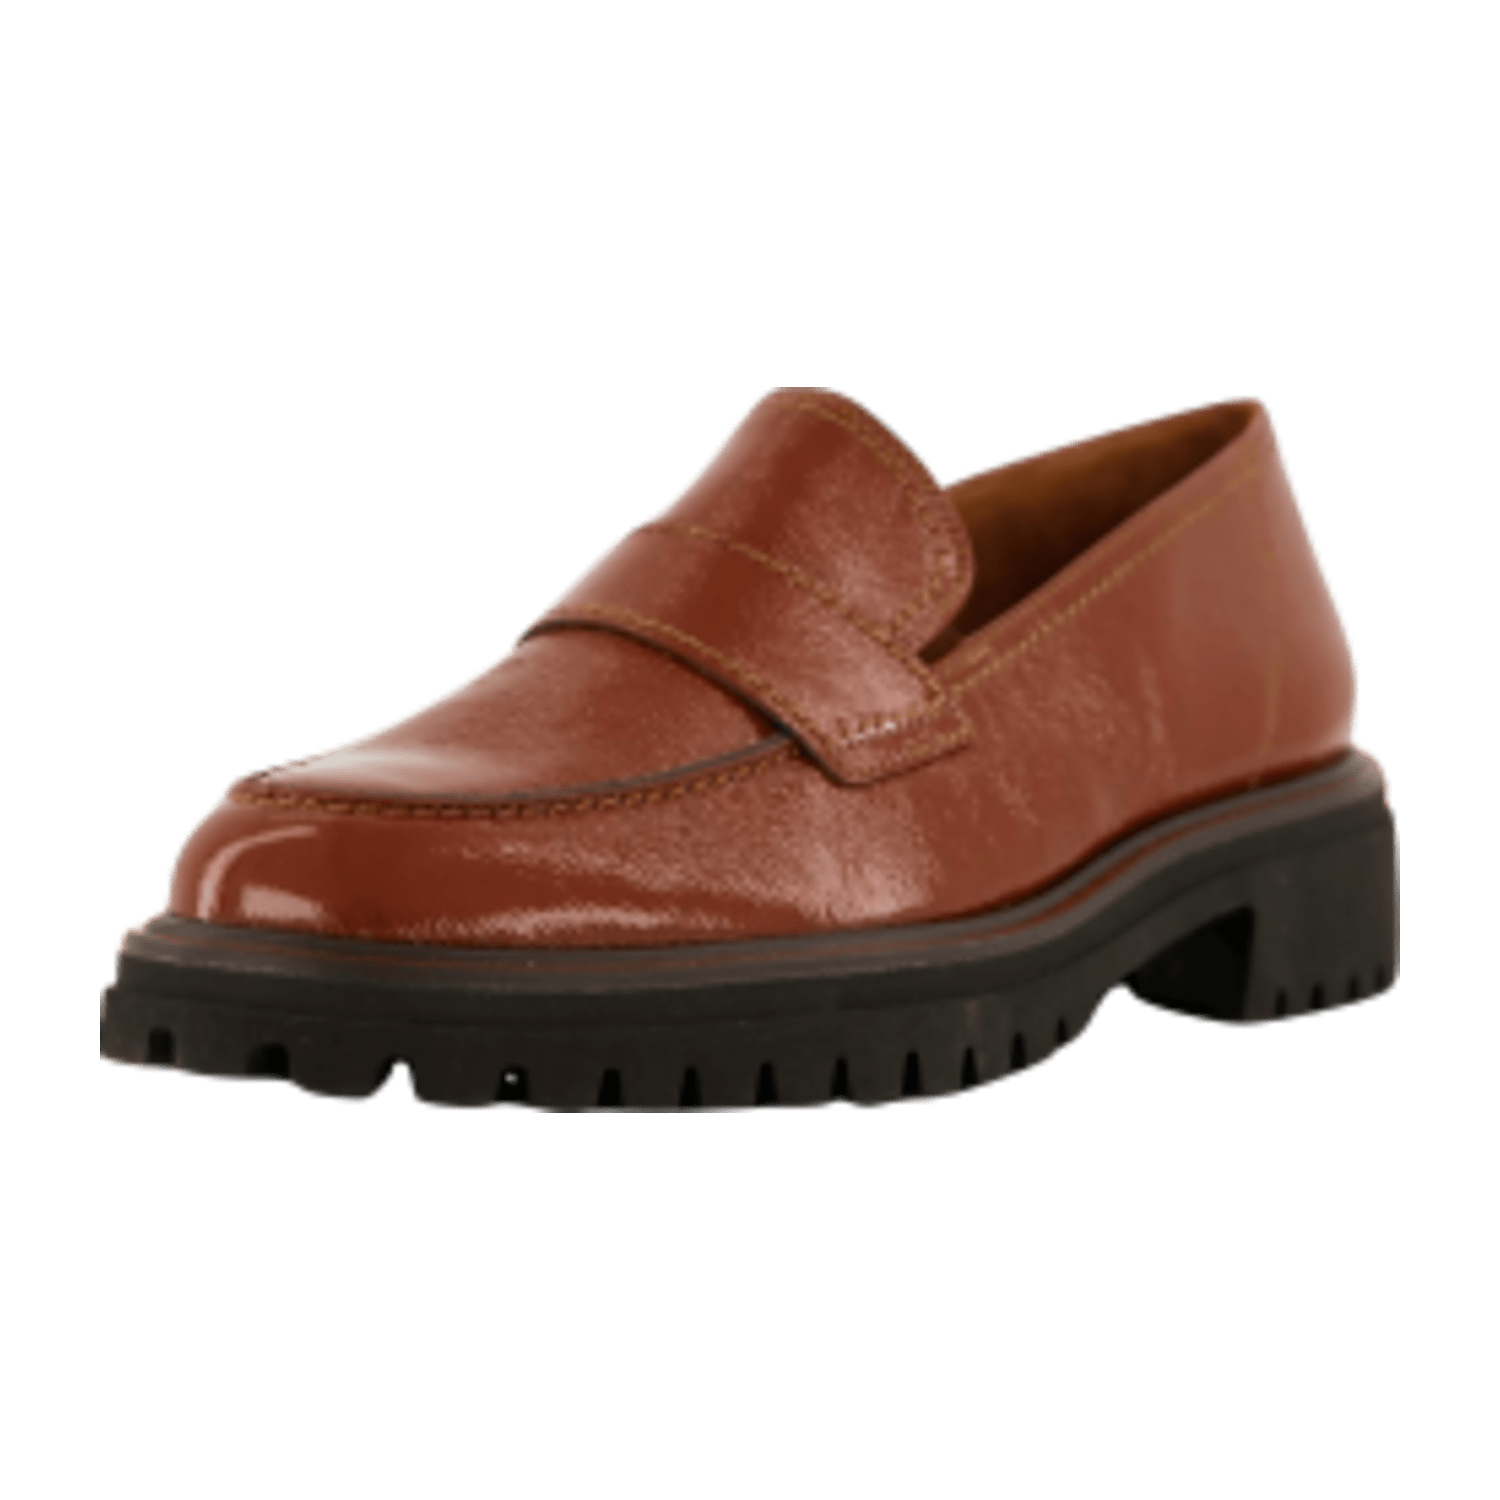 Paul Green Schuhe Slipper braun cognac Lack 2683